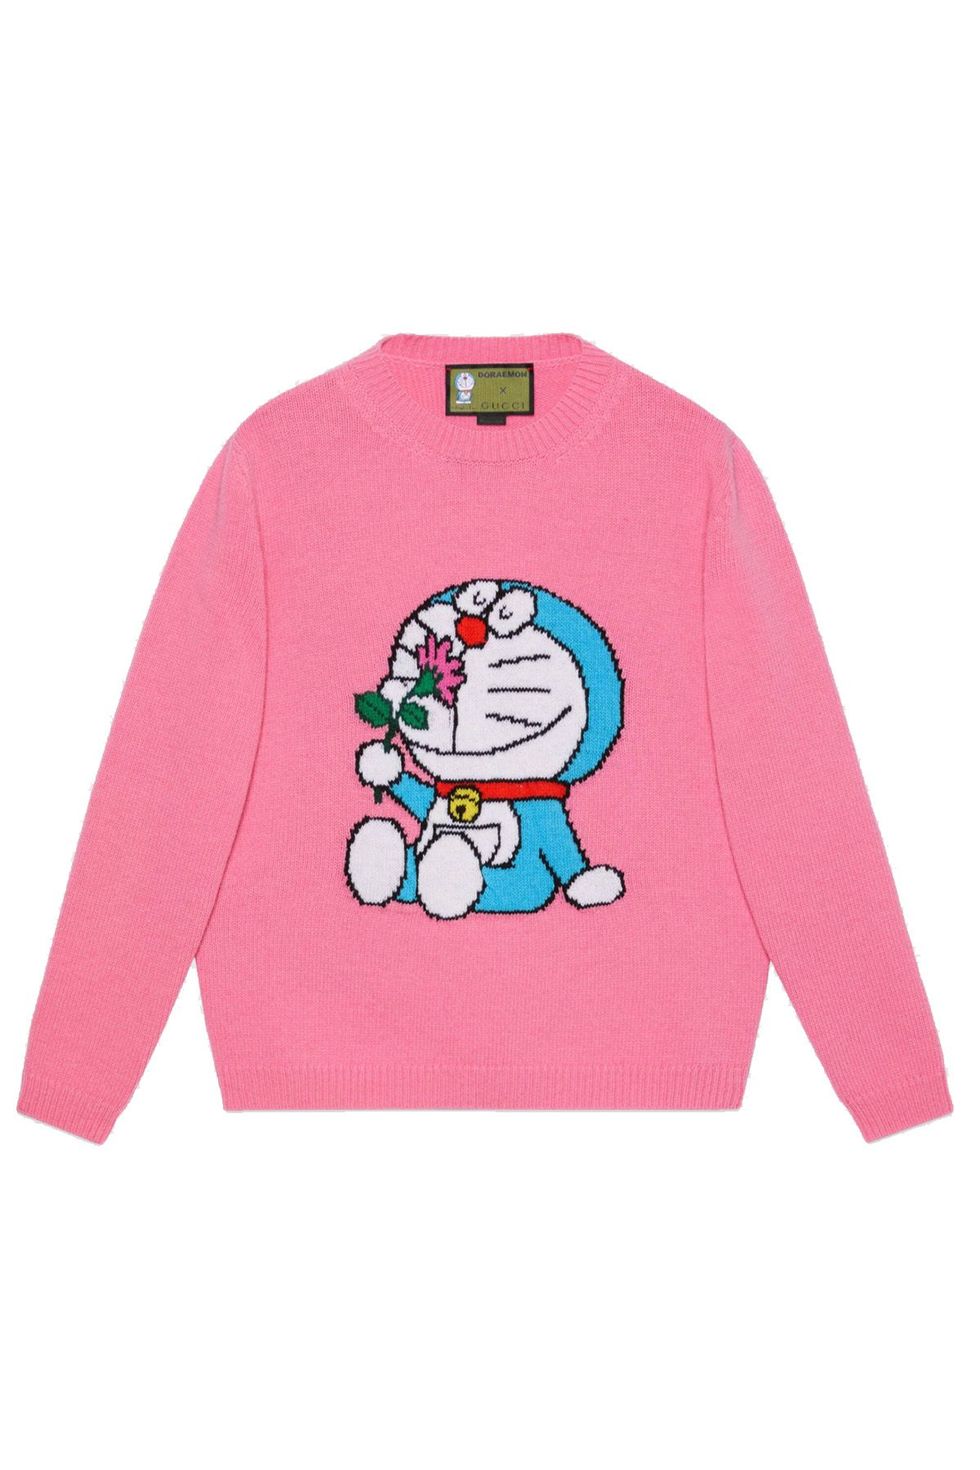 Doraemon x Gucci Wool Sweater